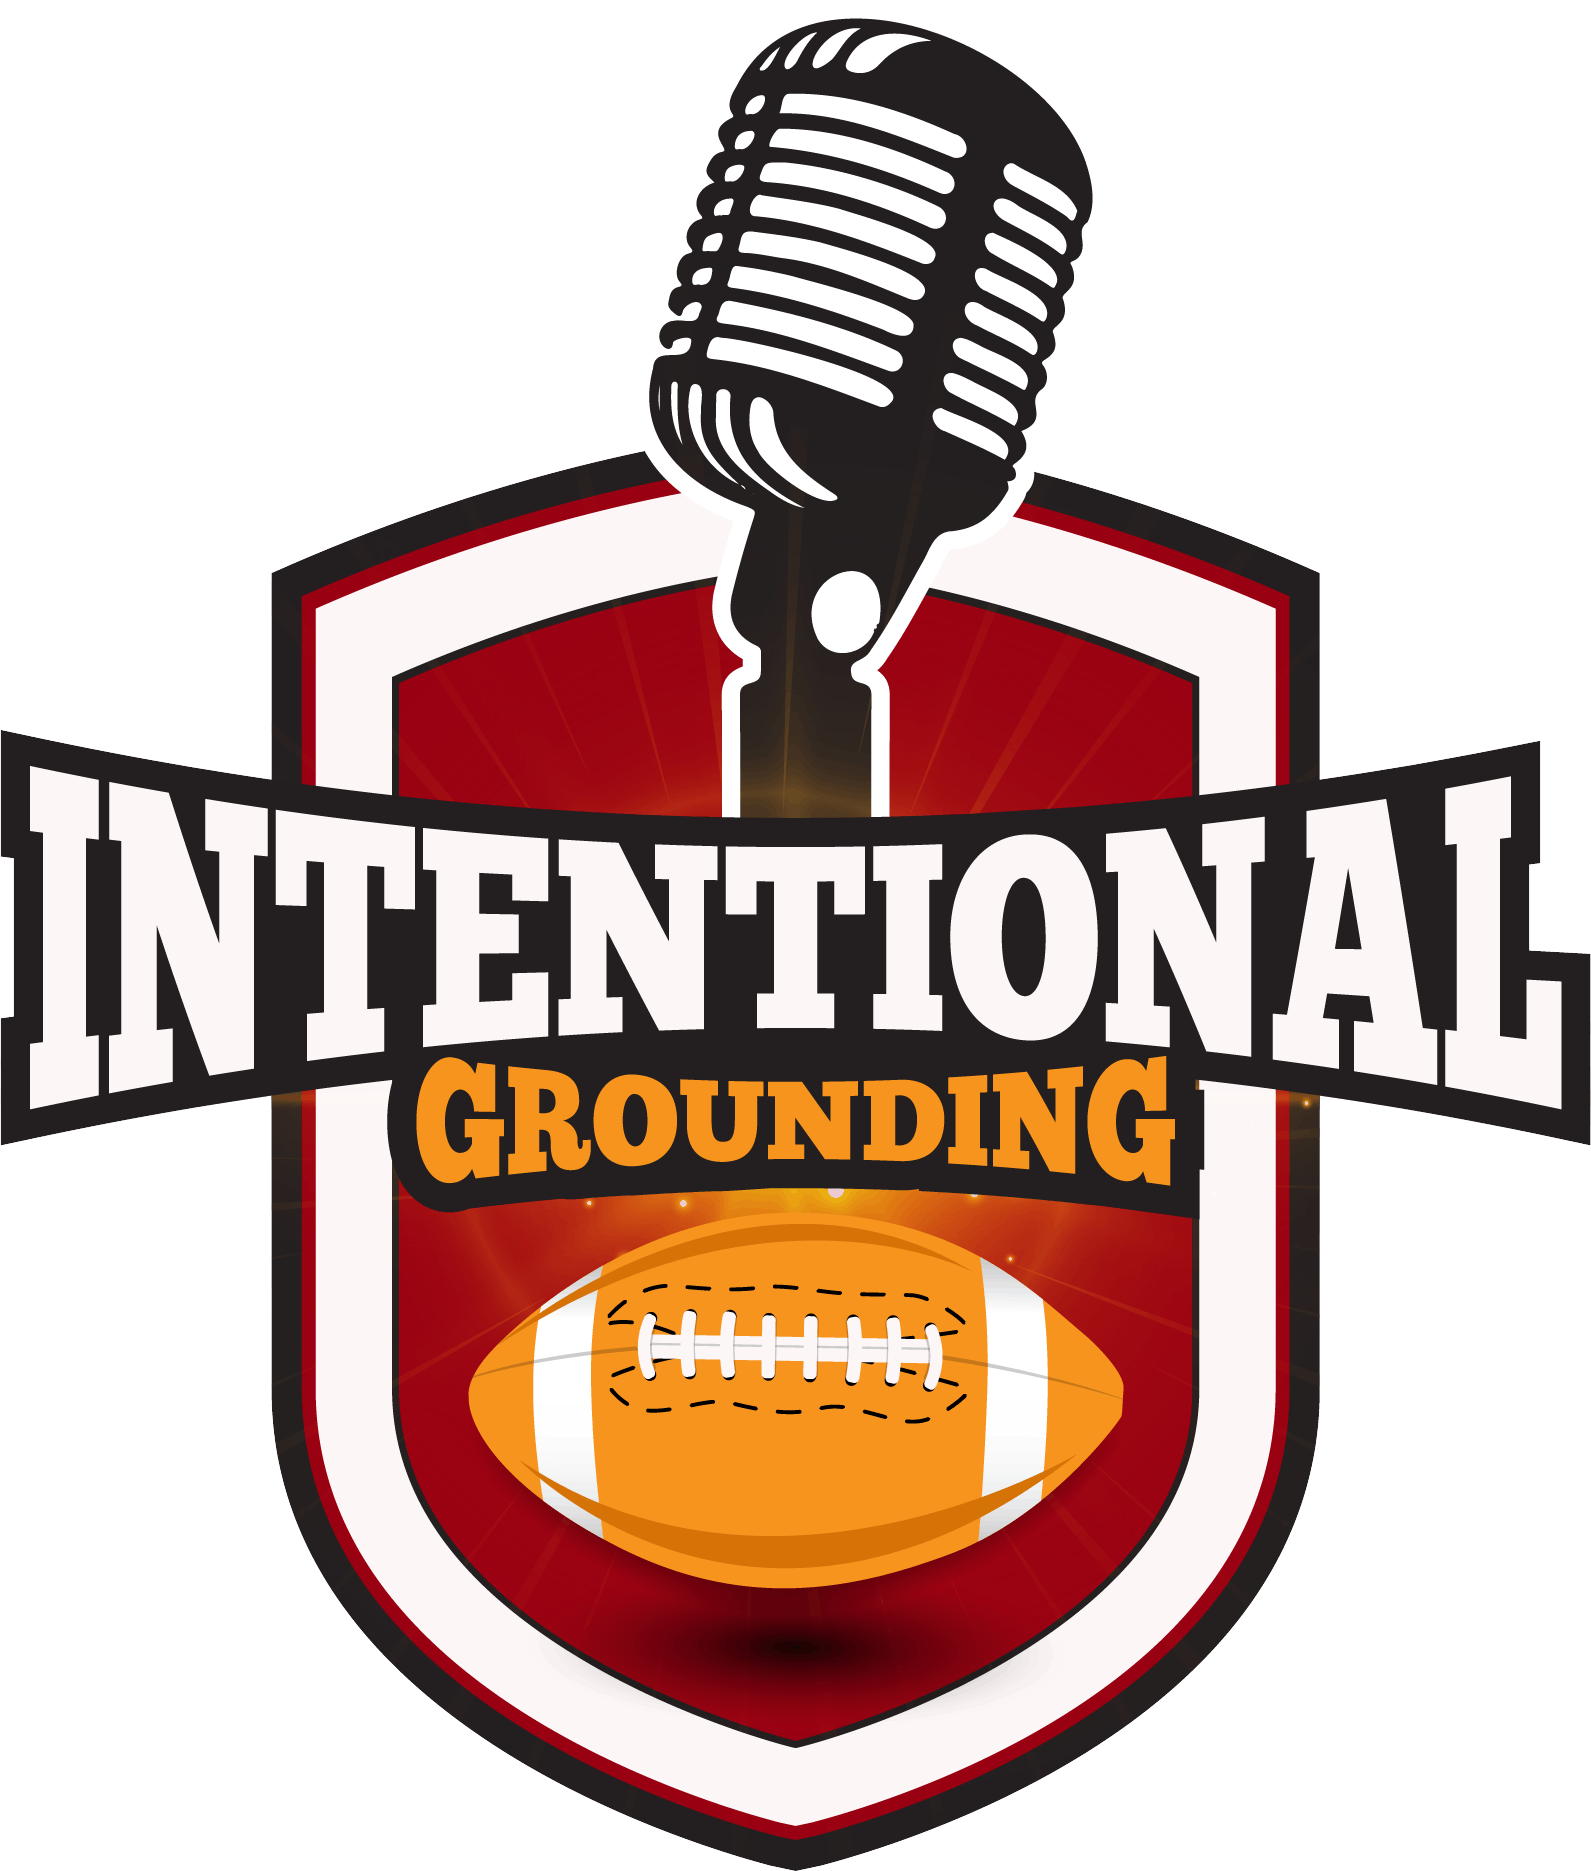 Intentional Grounding: NFL Draft Talk with Bruce Nolan